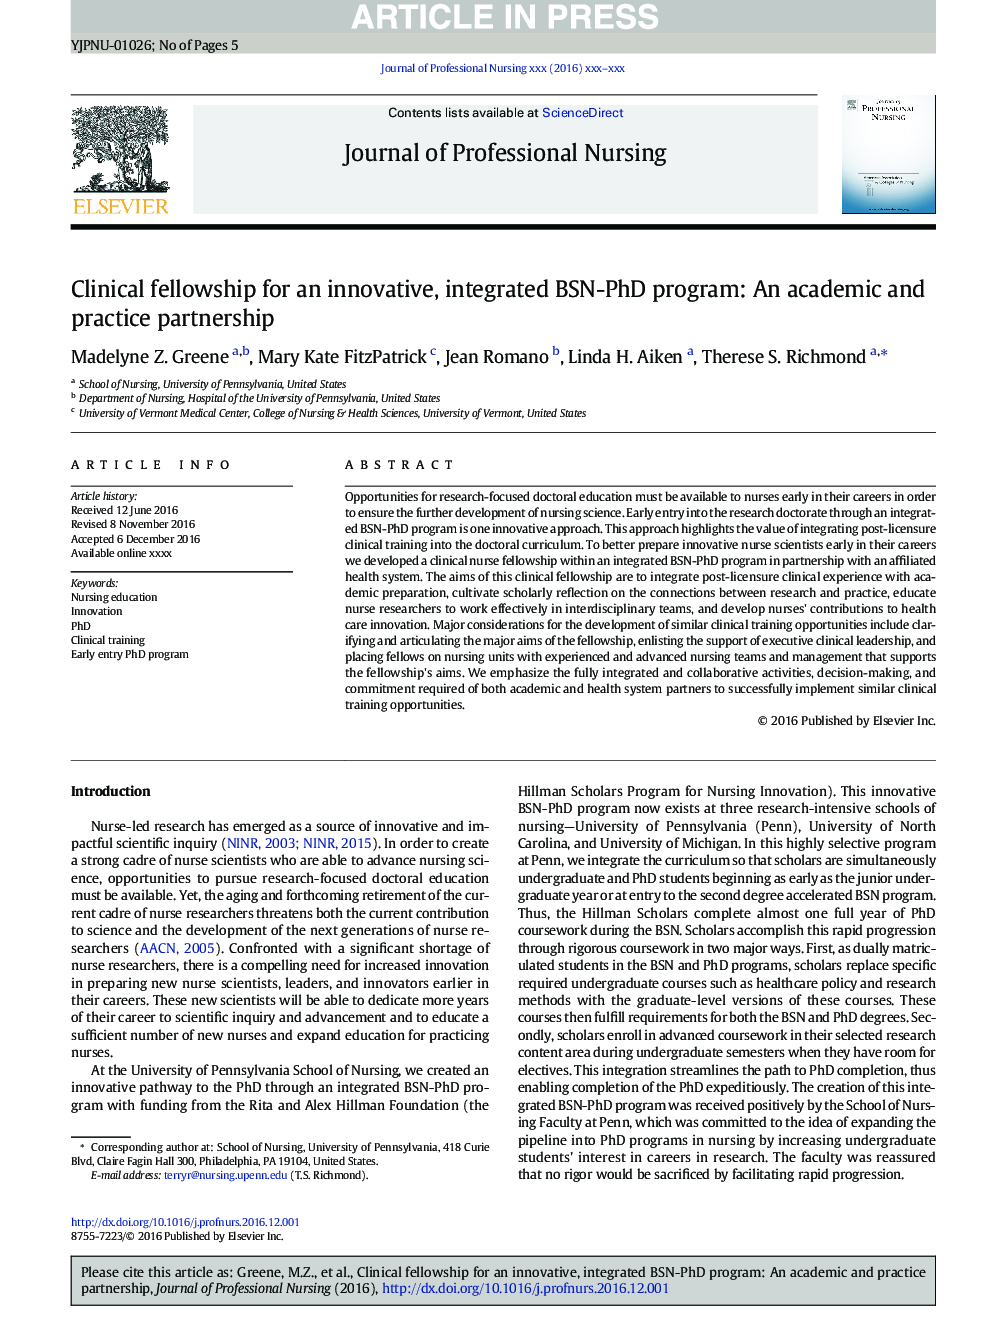 Clinical fellowship for an innovative, integrated BSN-PhD program: An academic and practice partnership